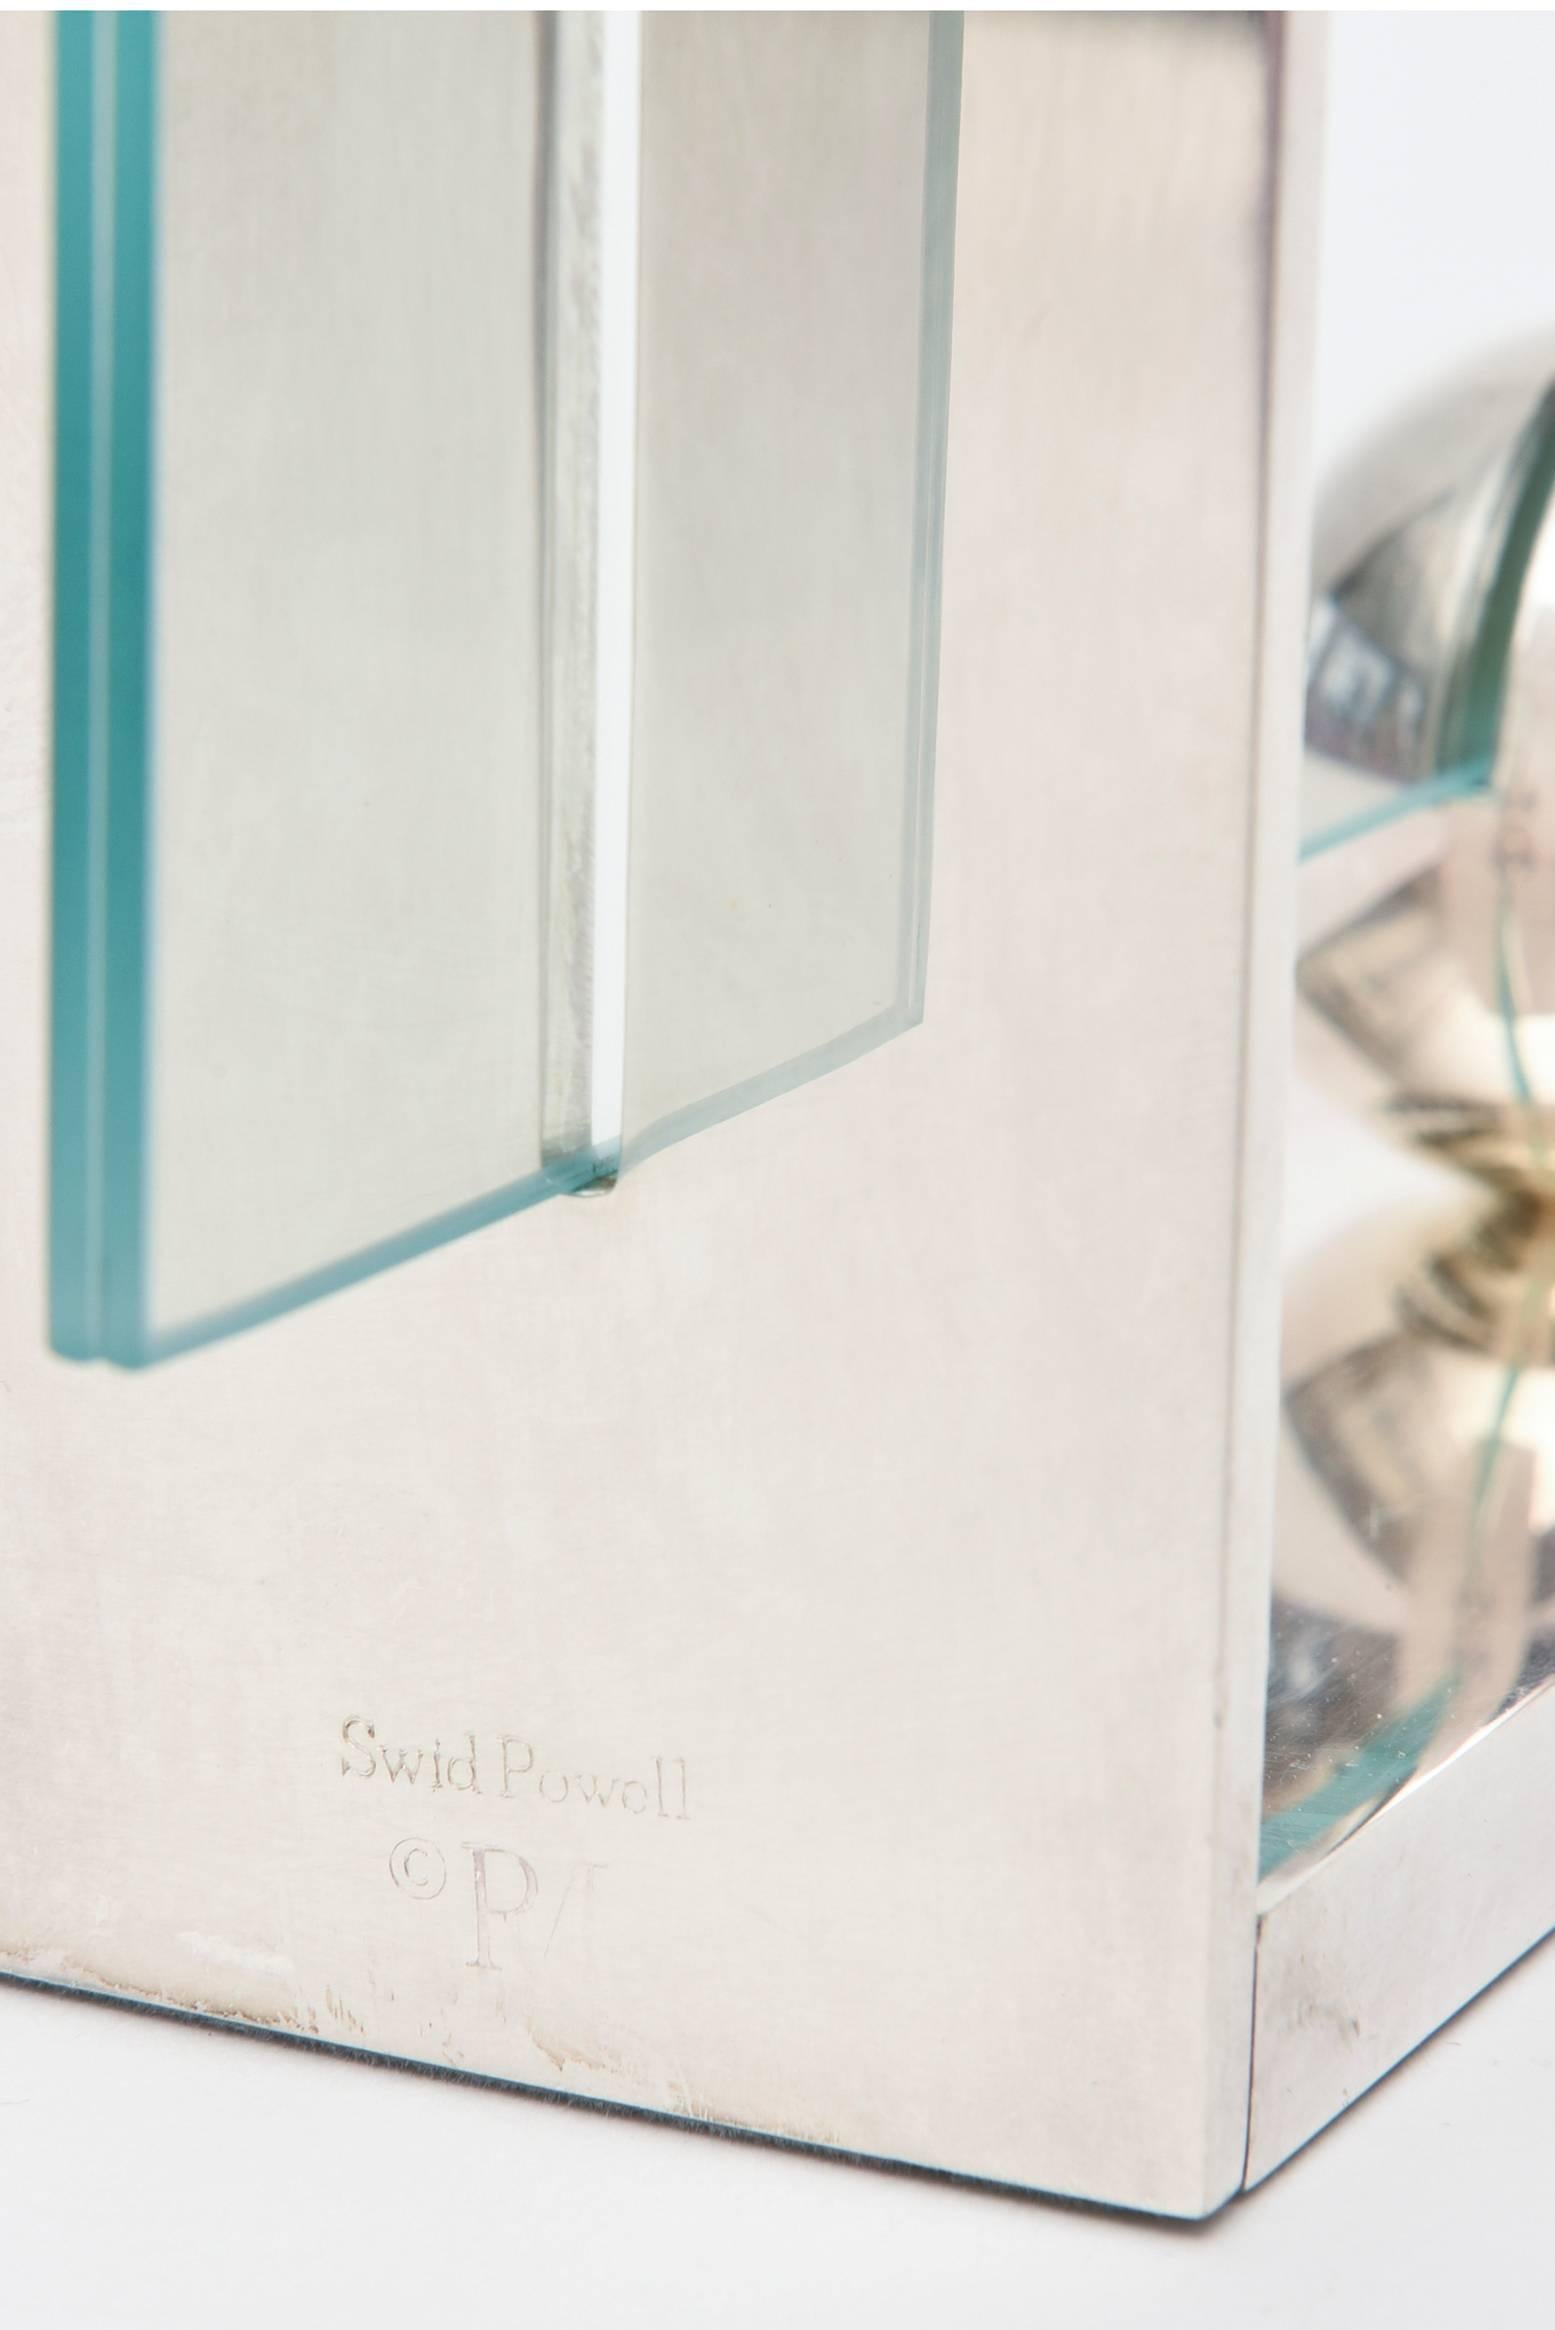 Glass Richard Meier for Swid Powell Modernist Silver-Plate Picture Frame